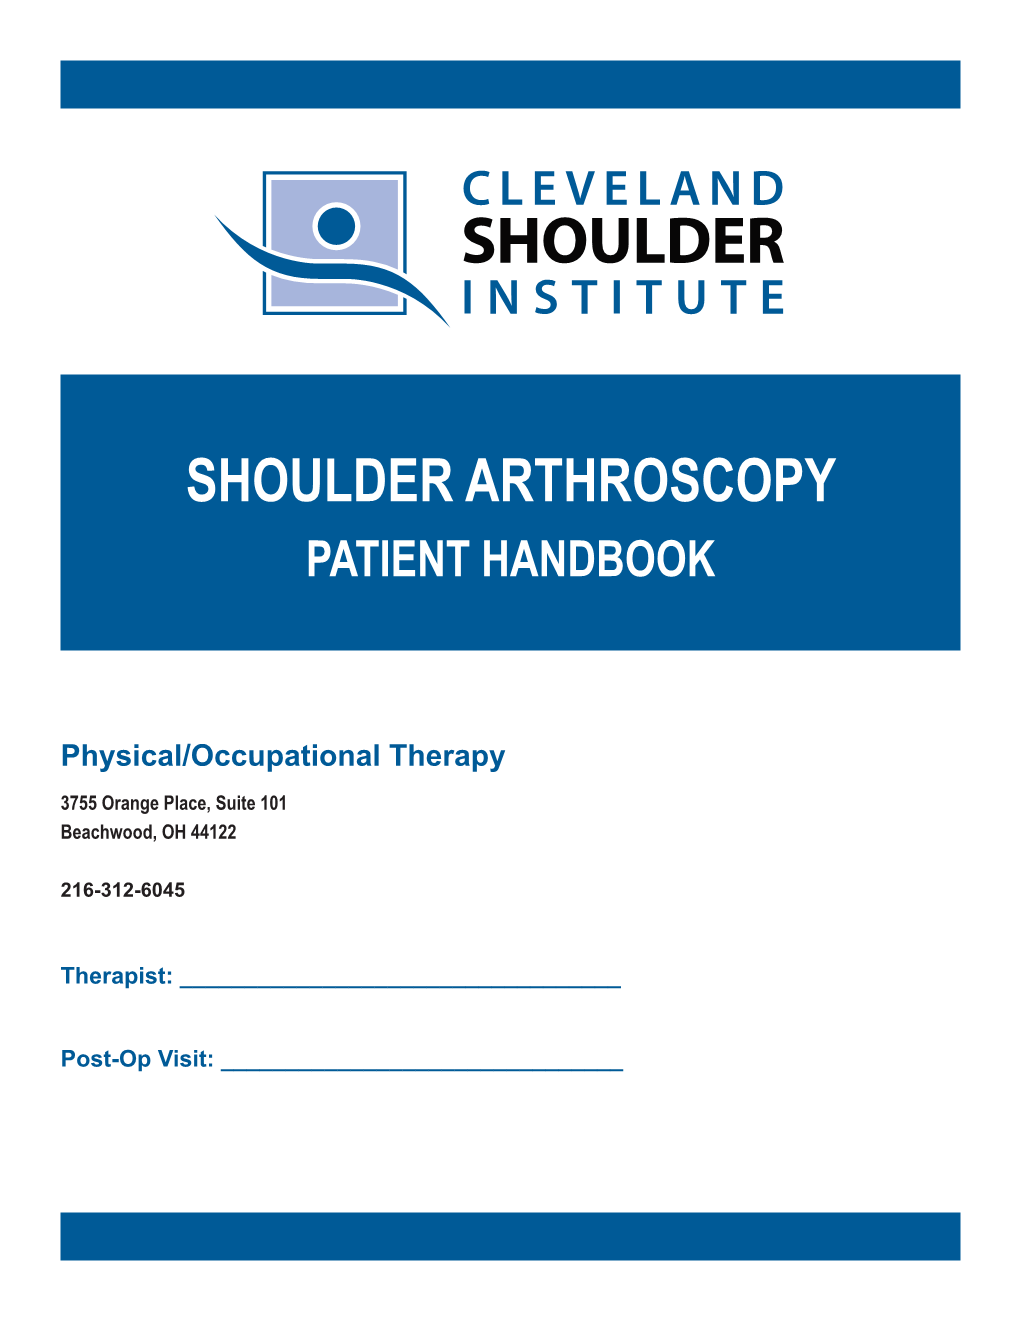 Shoulder Arthroscopy Patient Handbook